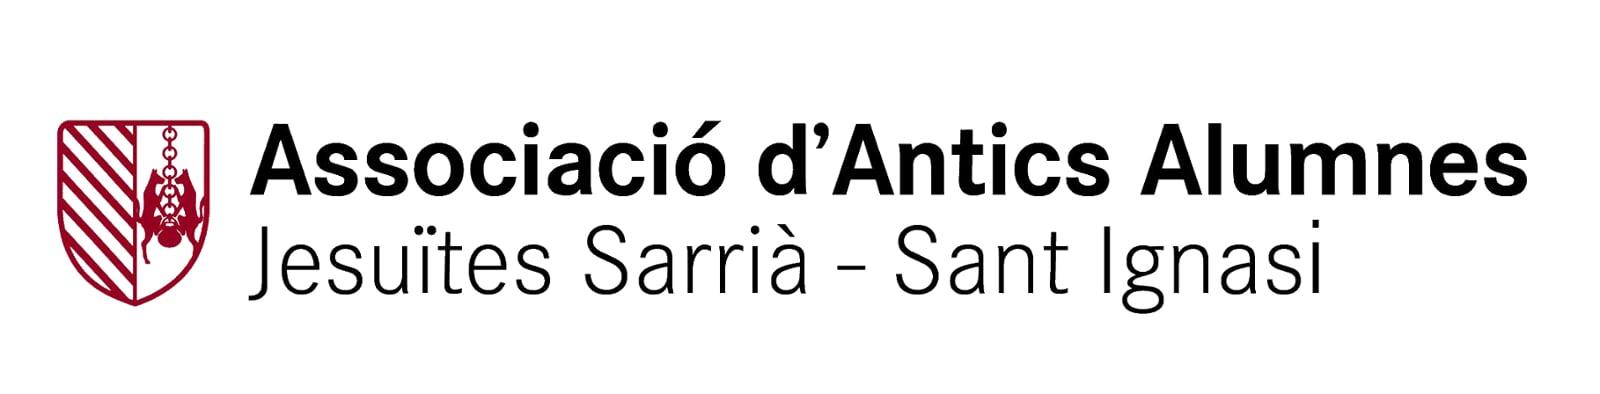 Antinc Alumnes Sarrià